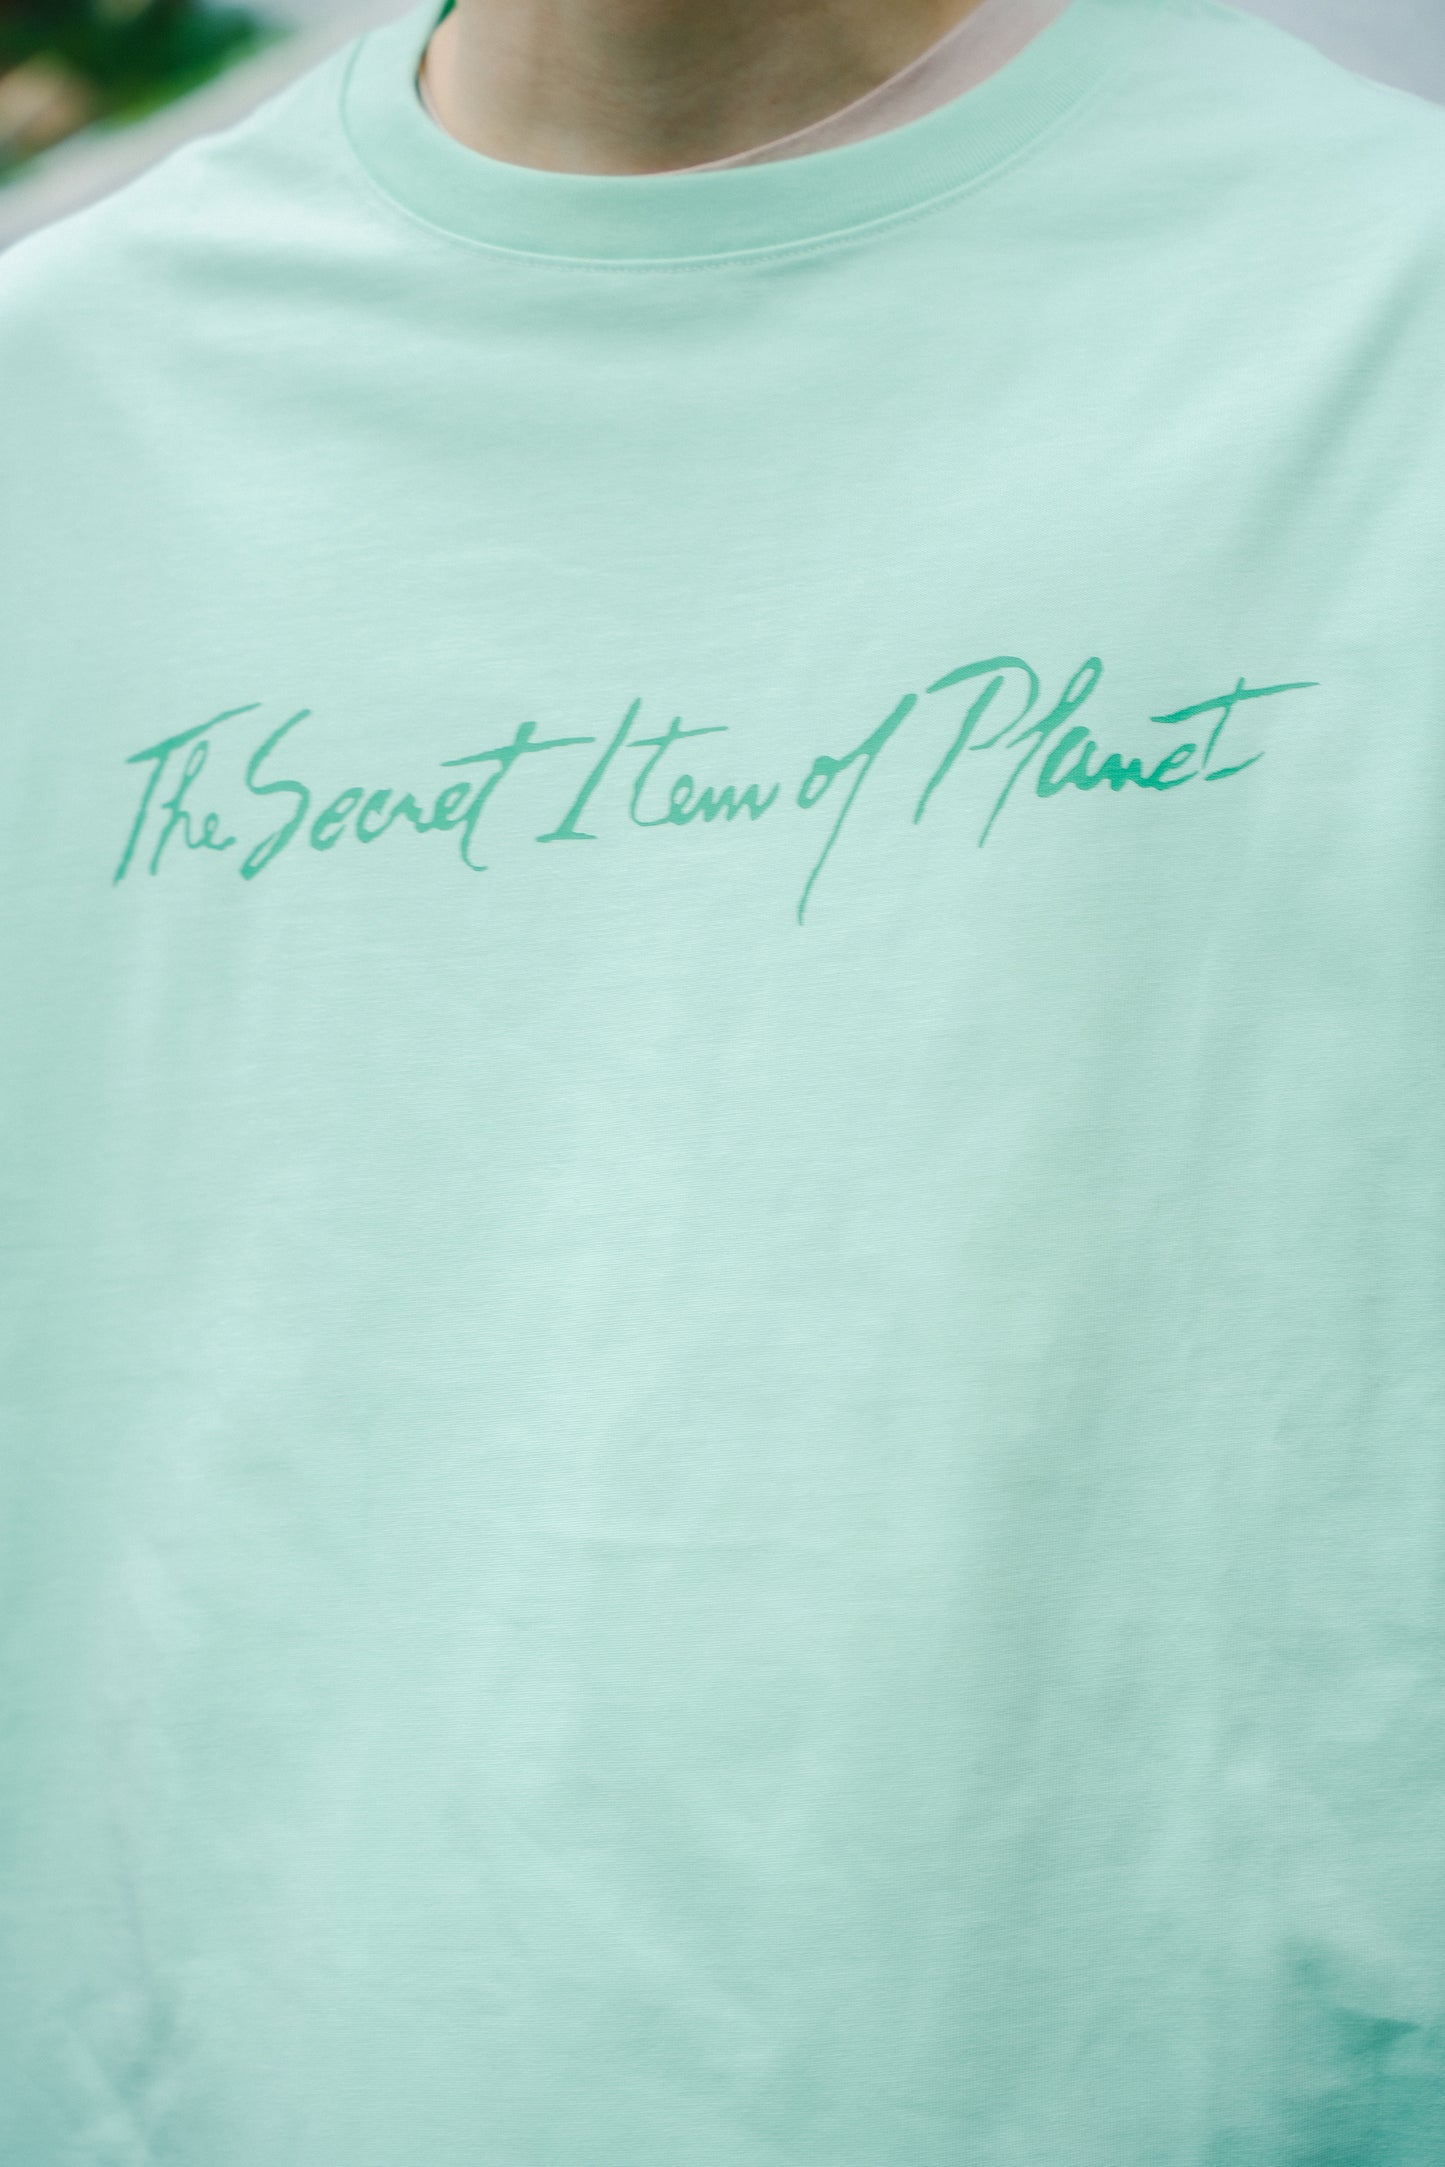 The secret item of planet tee